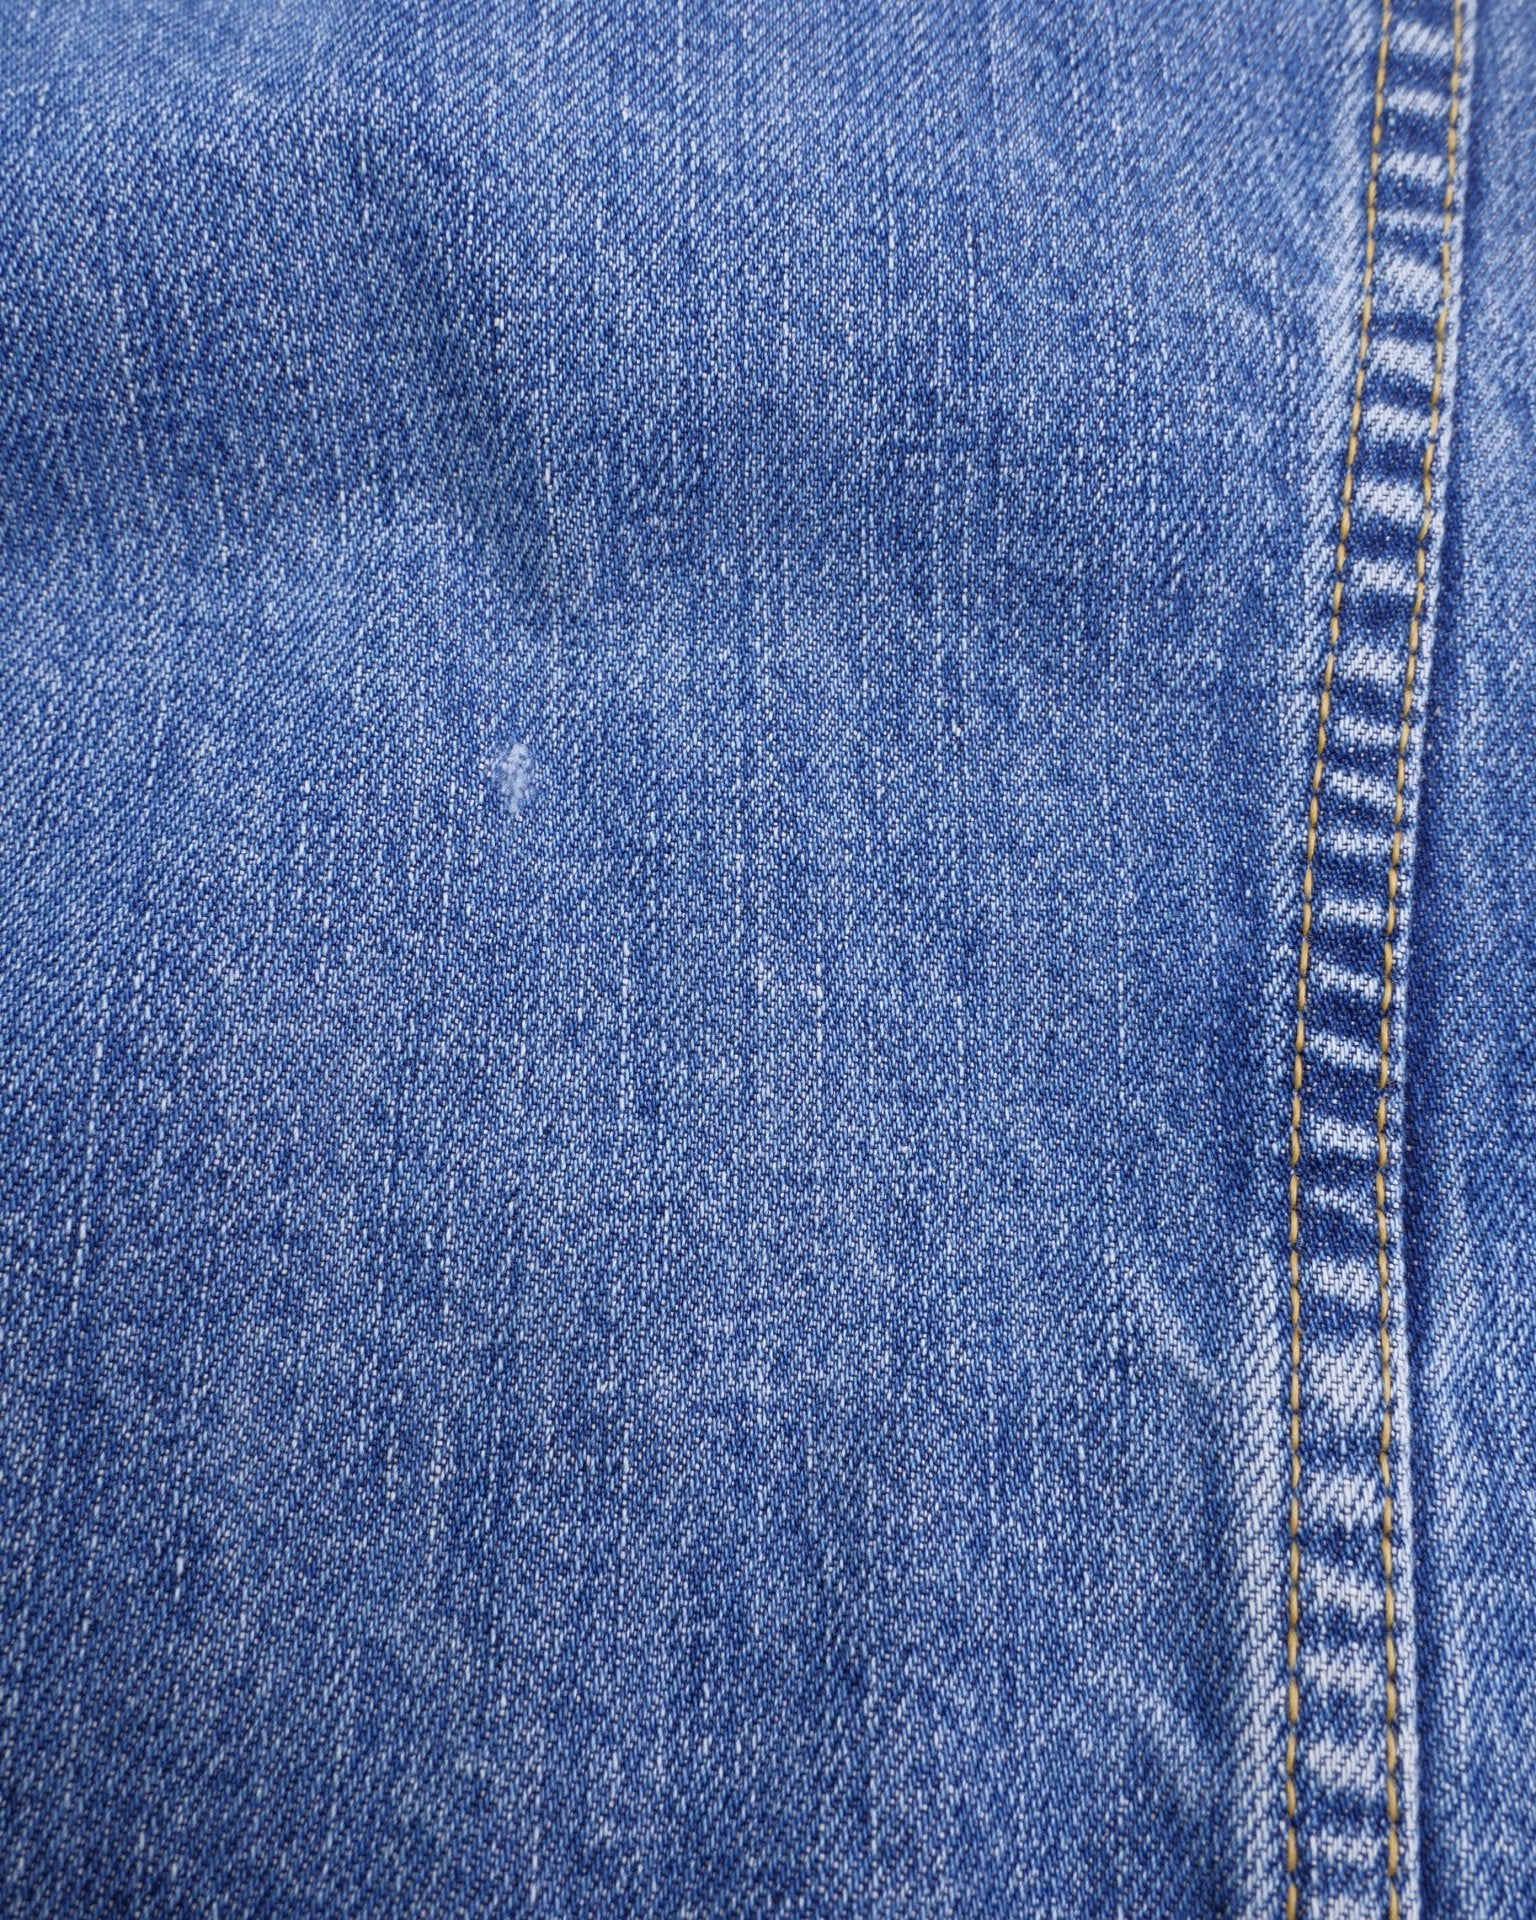 lee embroidered Logo Vintage Jeans Jacke - Peeces